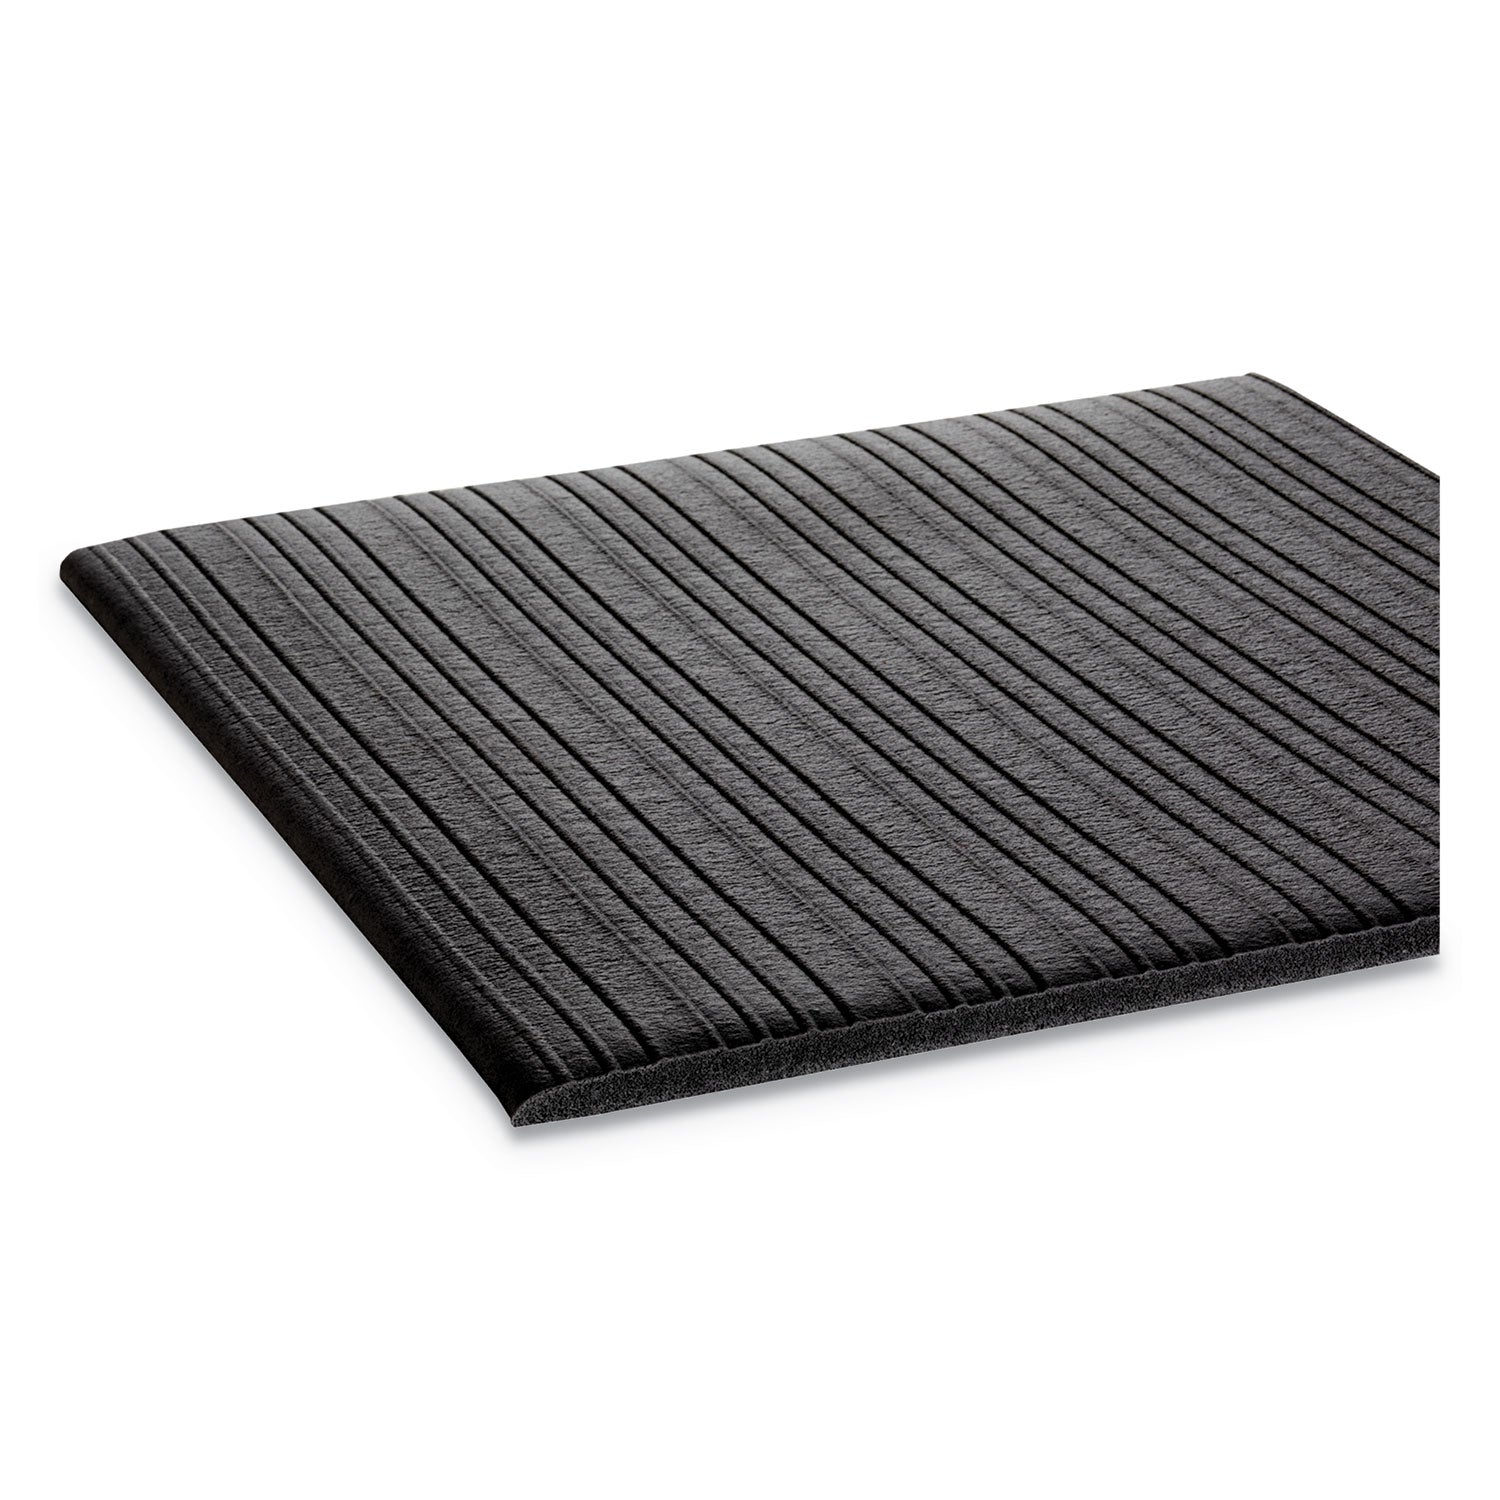 Ribbed Vinyl Anti-Fatigue Mat, 36 x 60, Black - 